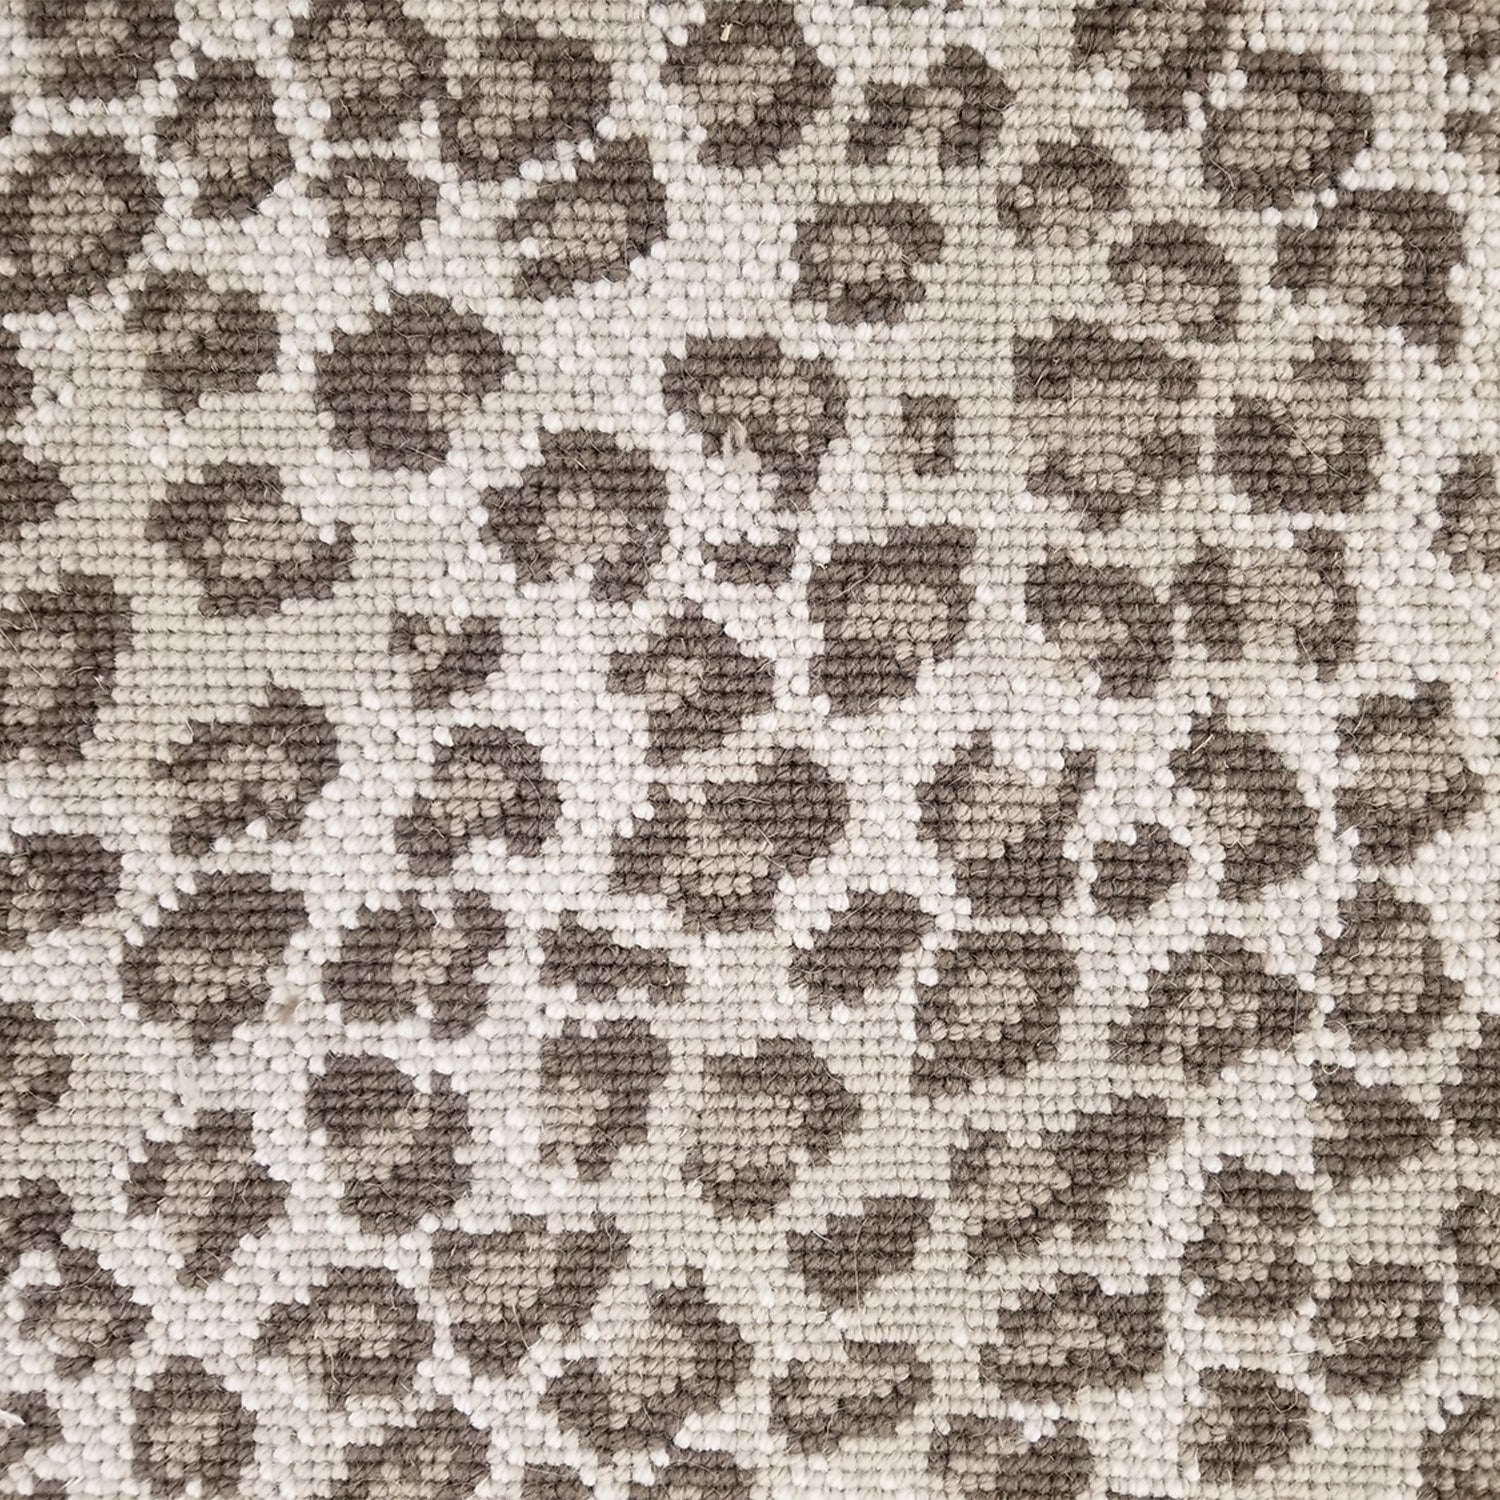 Wool broadloom carpet swatch in a leopard print in tan and brown on a mottled cream field.